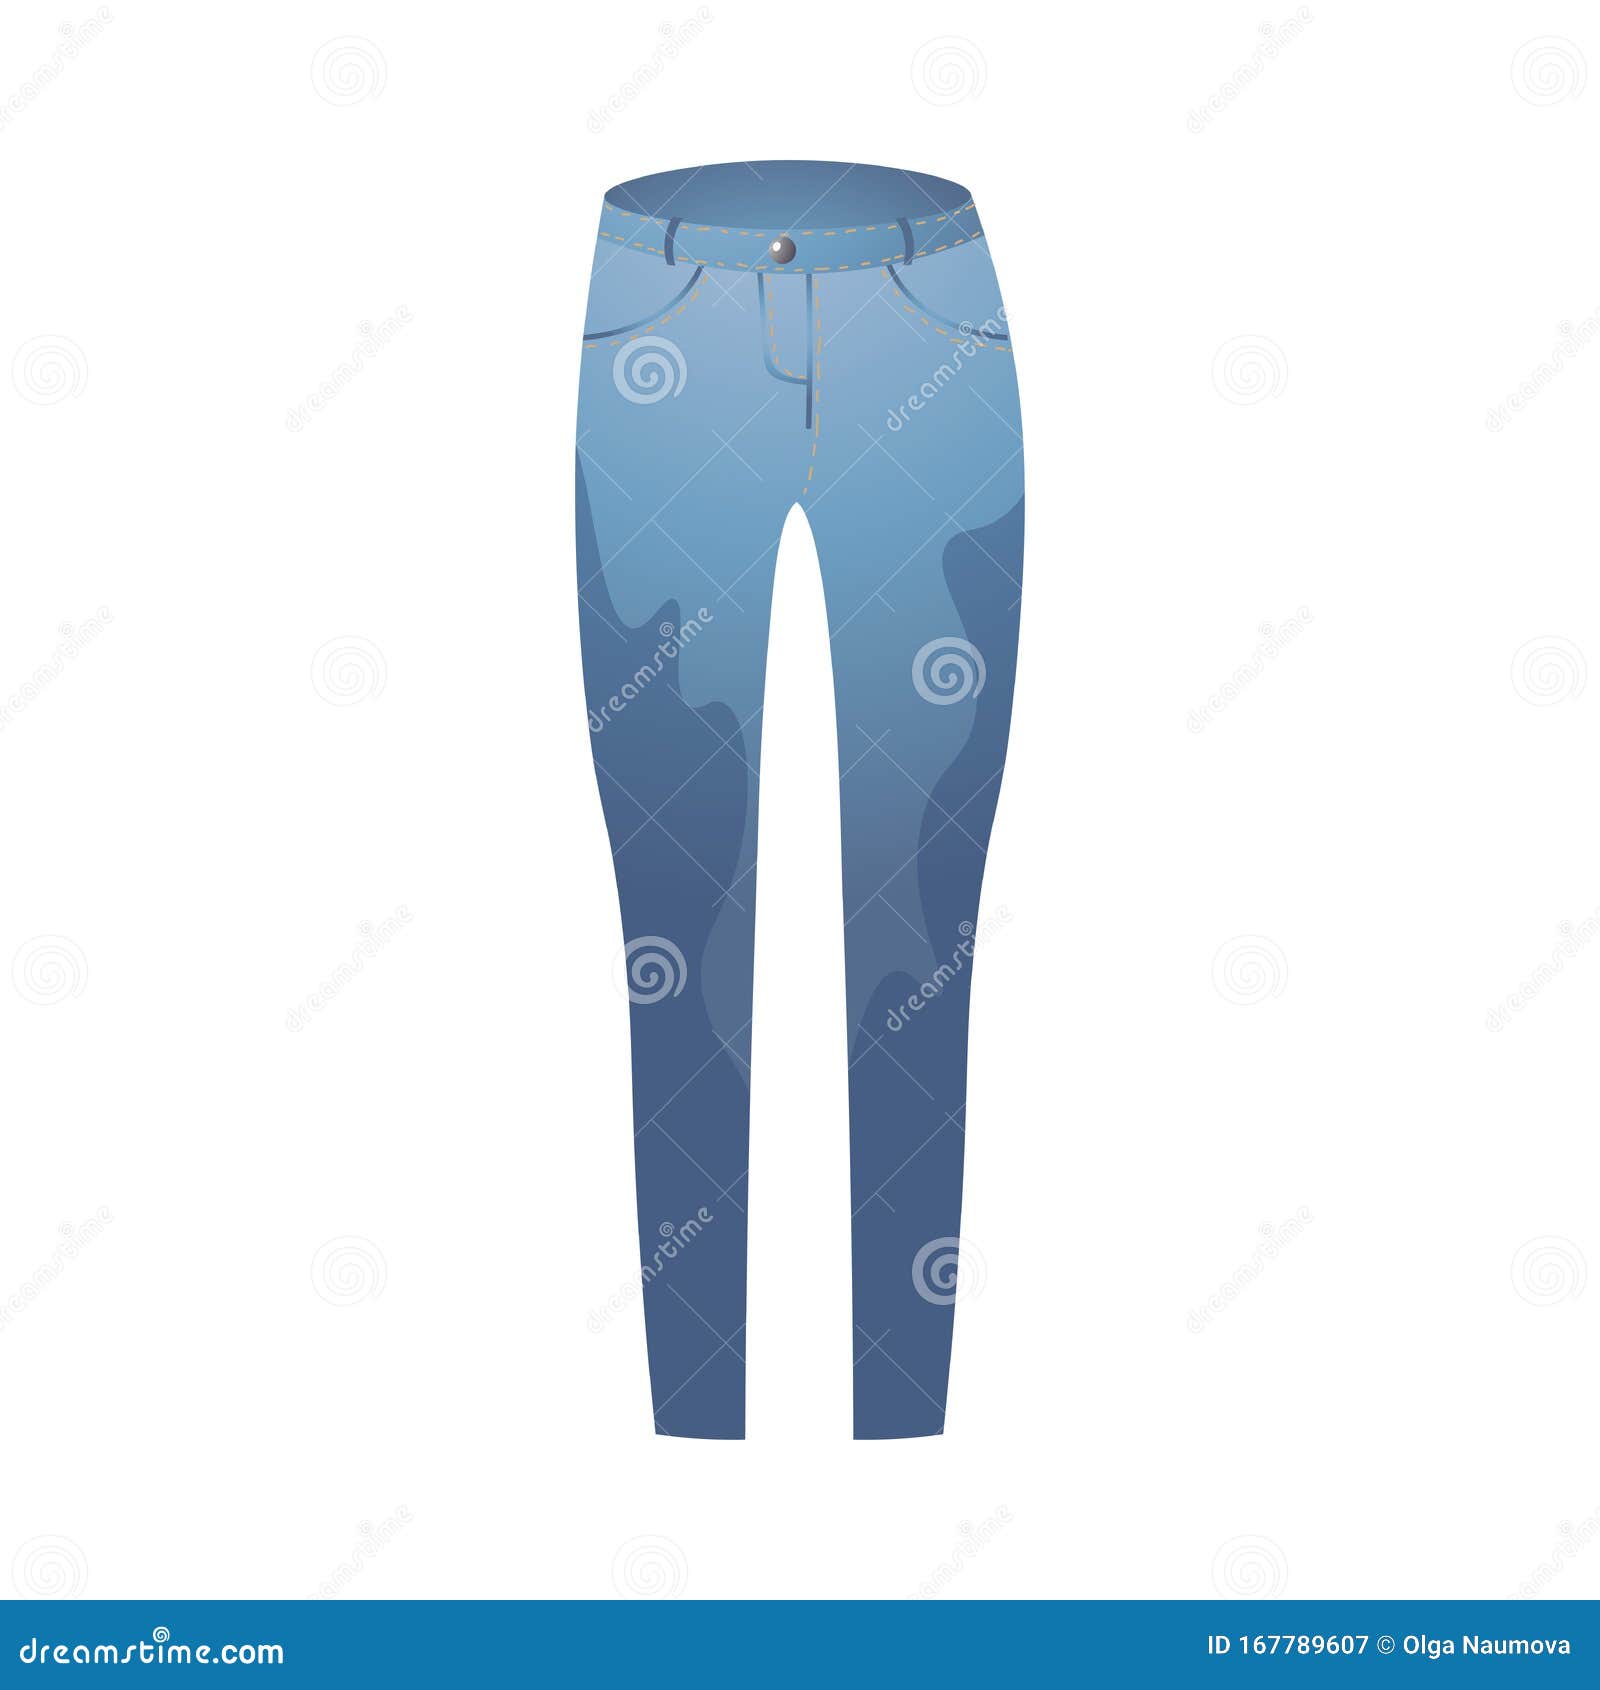 Trendy Blue Narrow Denim Pants Front View. Vector Illustration in Flat ...